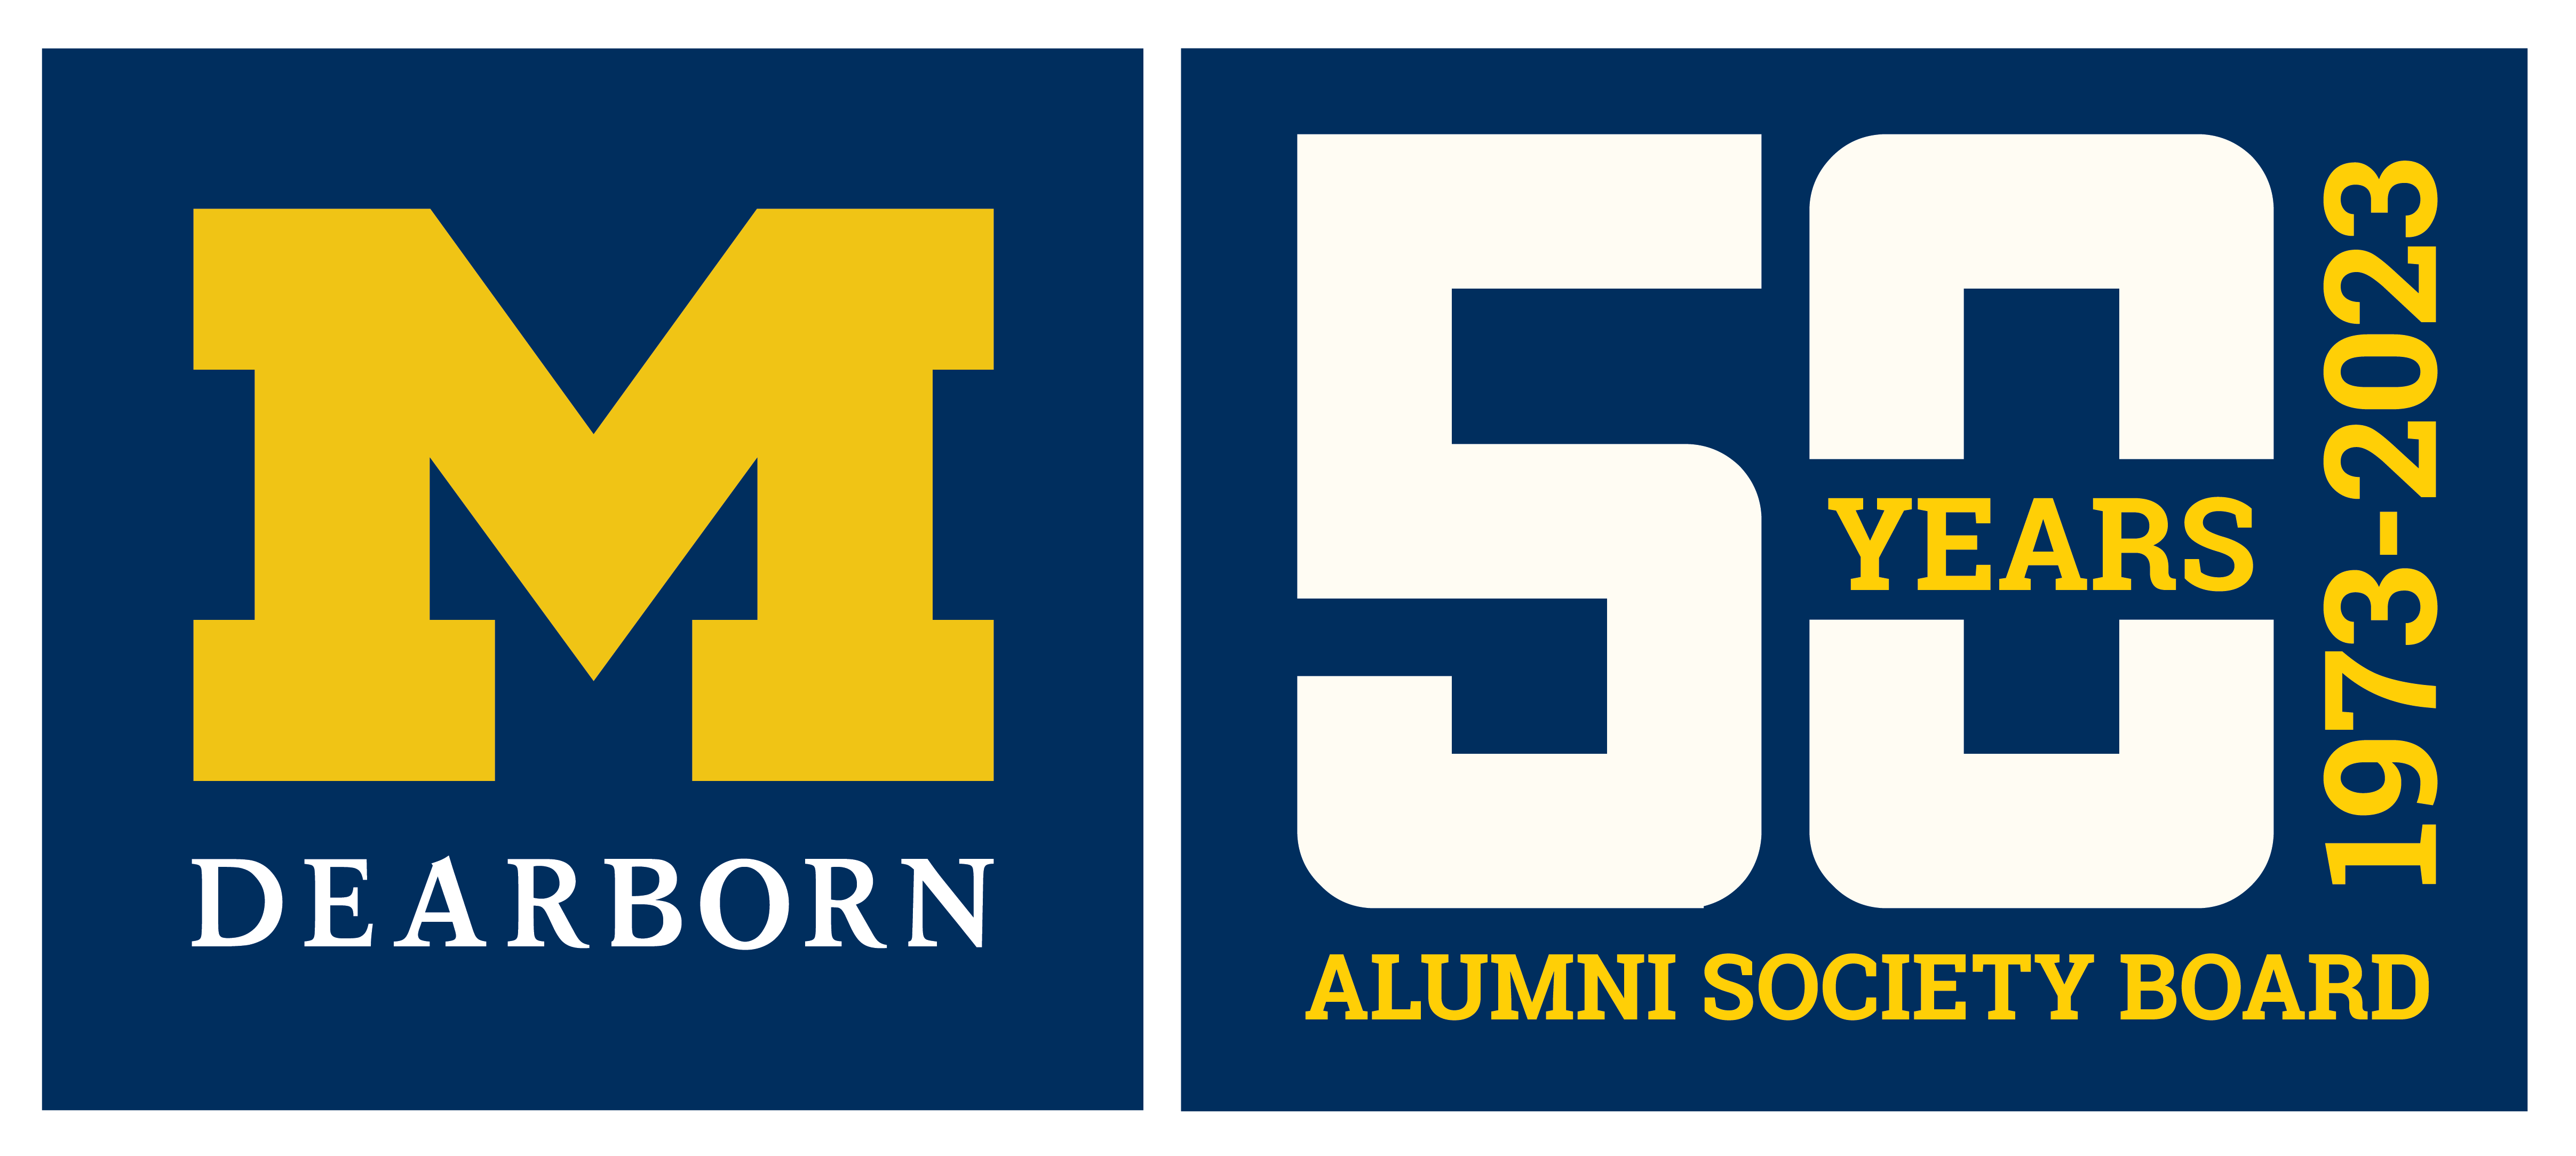 Alumni Society Board 50th Anniversary